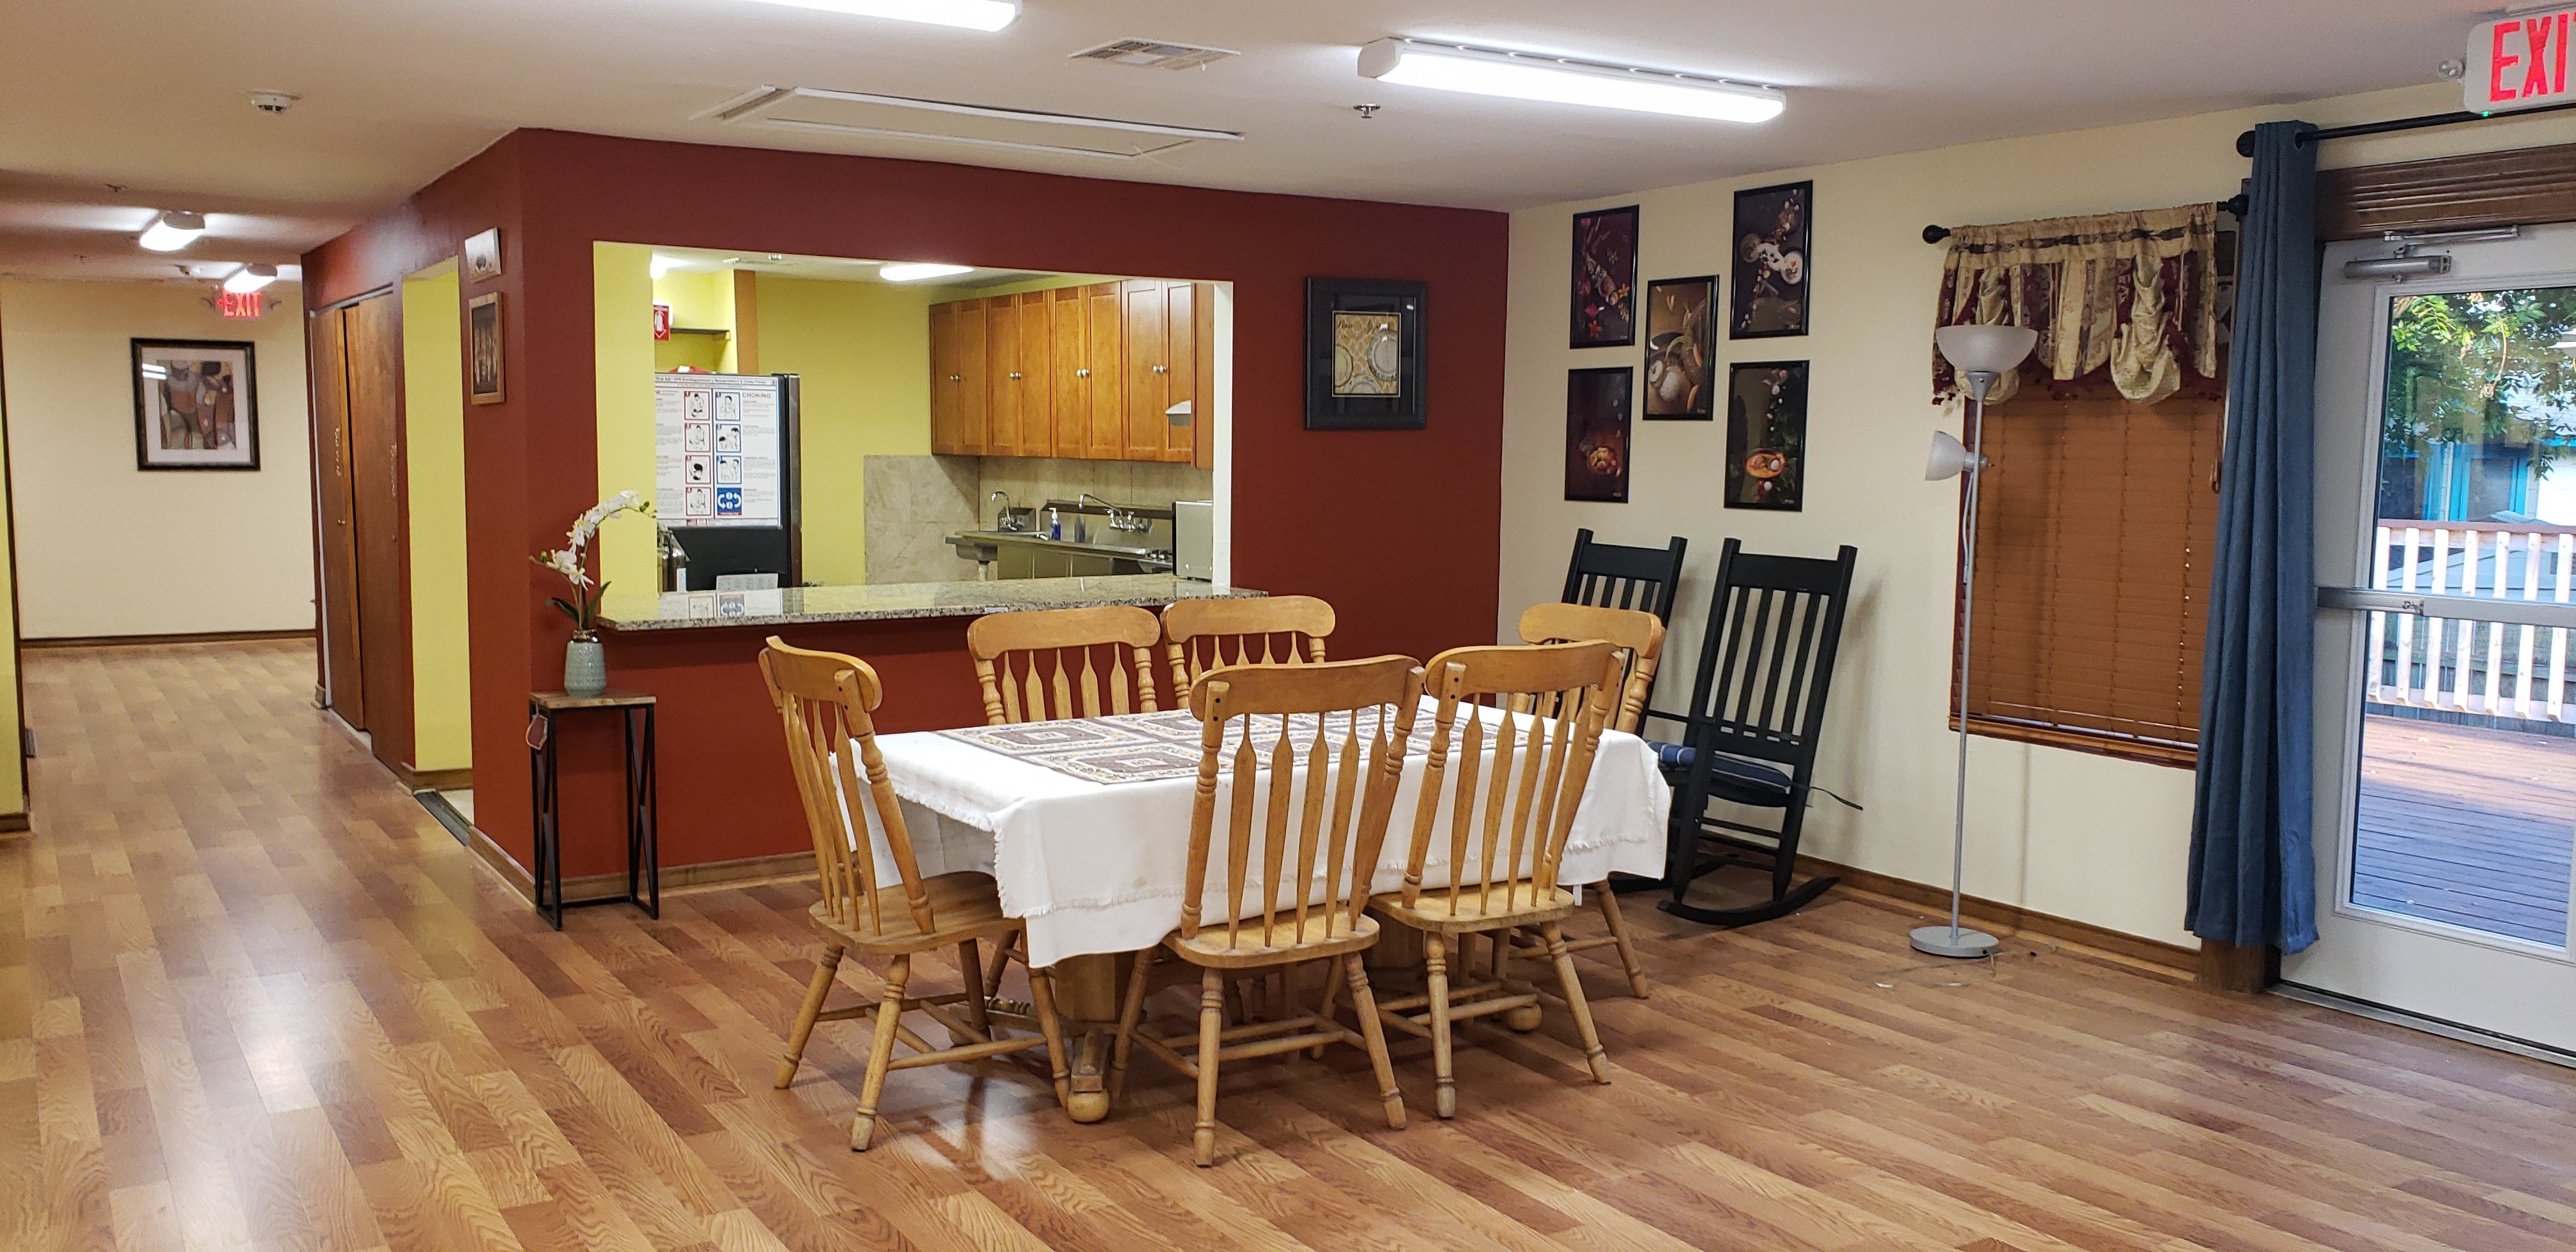 Senior Home Dining Area 2